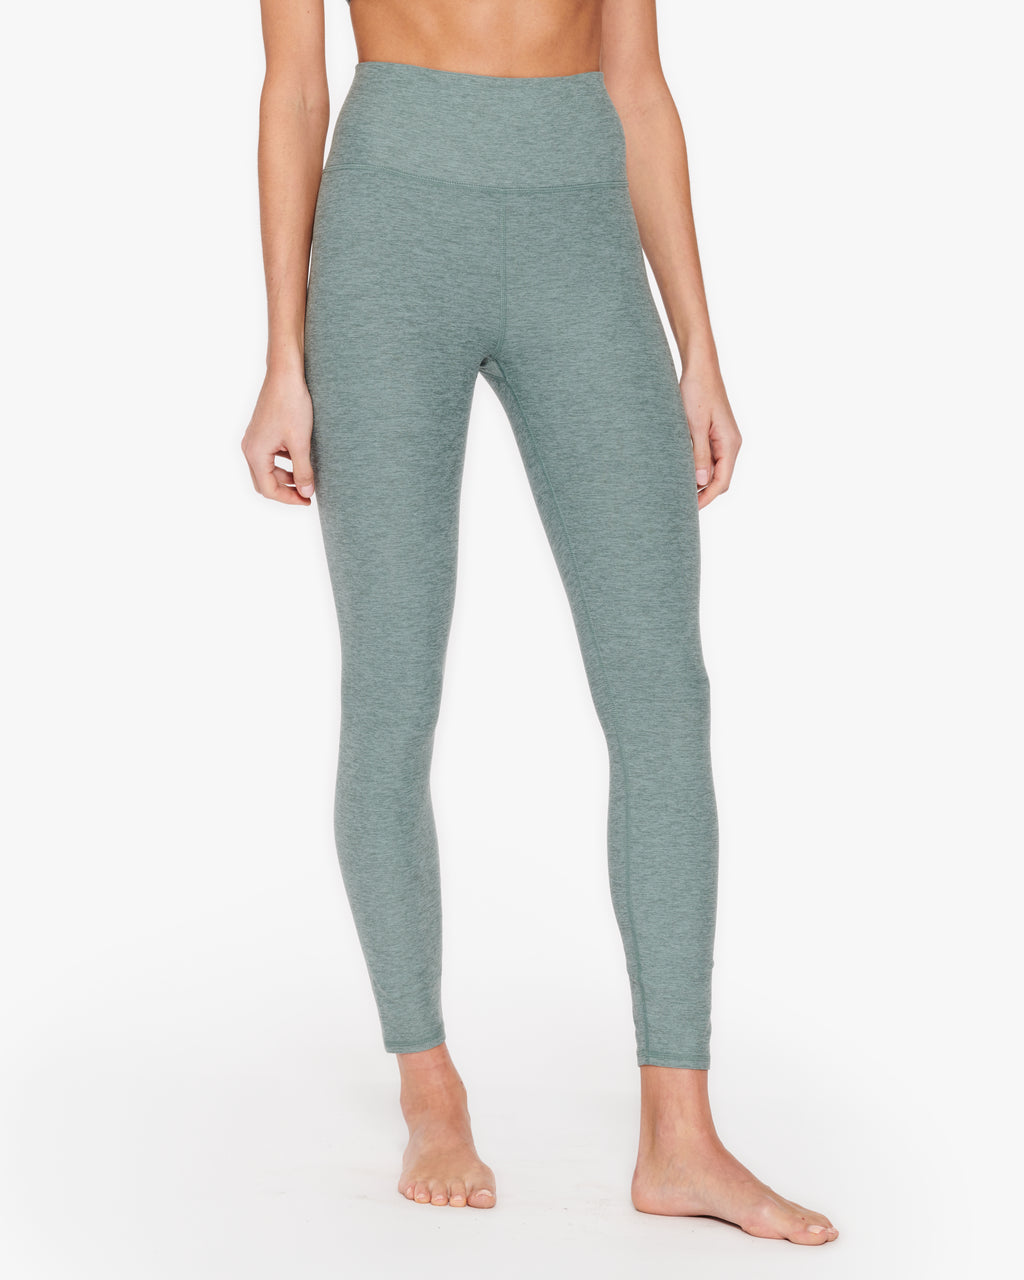 Alo Yoga Ruched Soft Sculpt Pant Green Sweatpants Women's XXS (0)